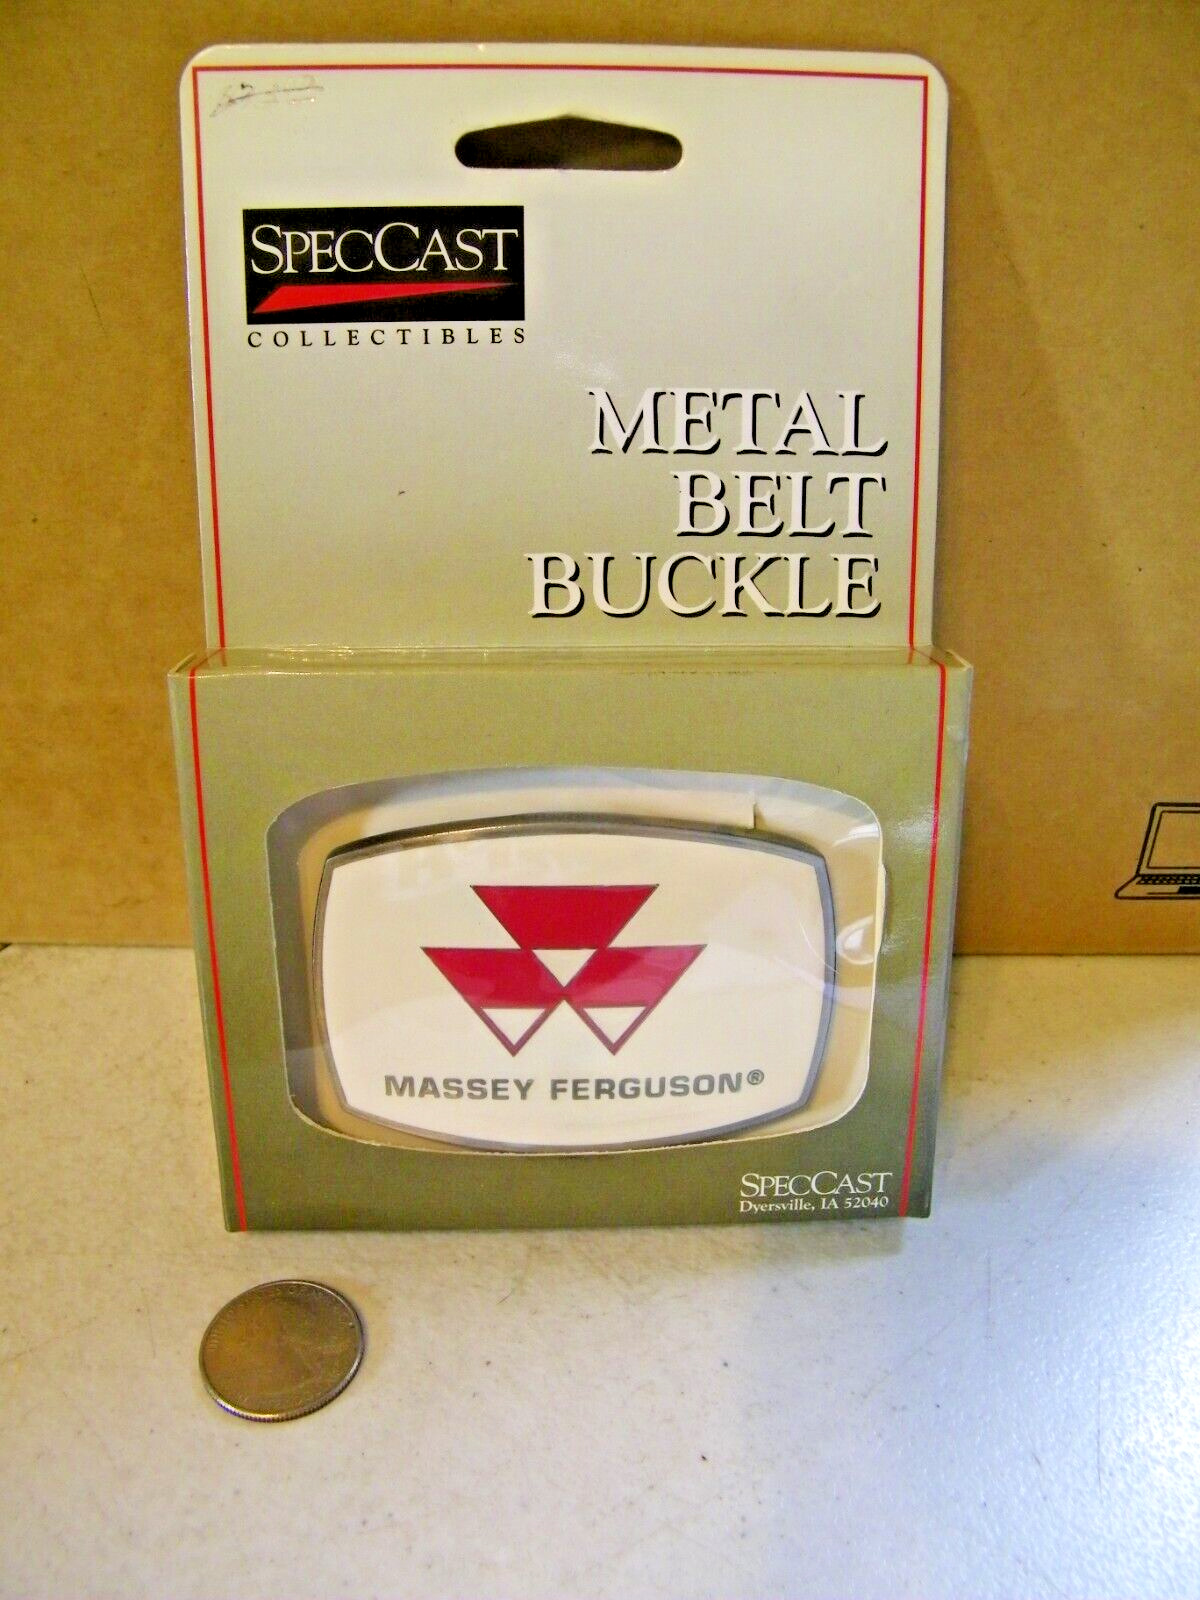 New Vintage 1990s Massey Ferguson SpecCast Belt Buckle In Original Packaging